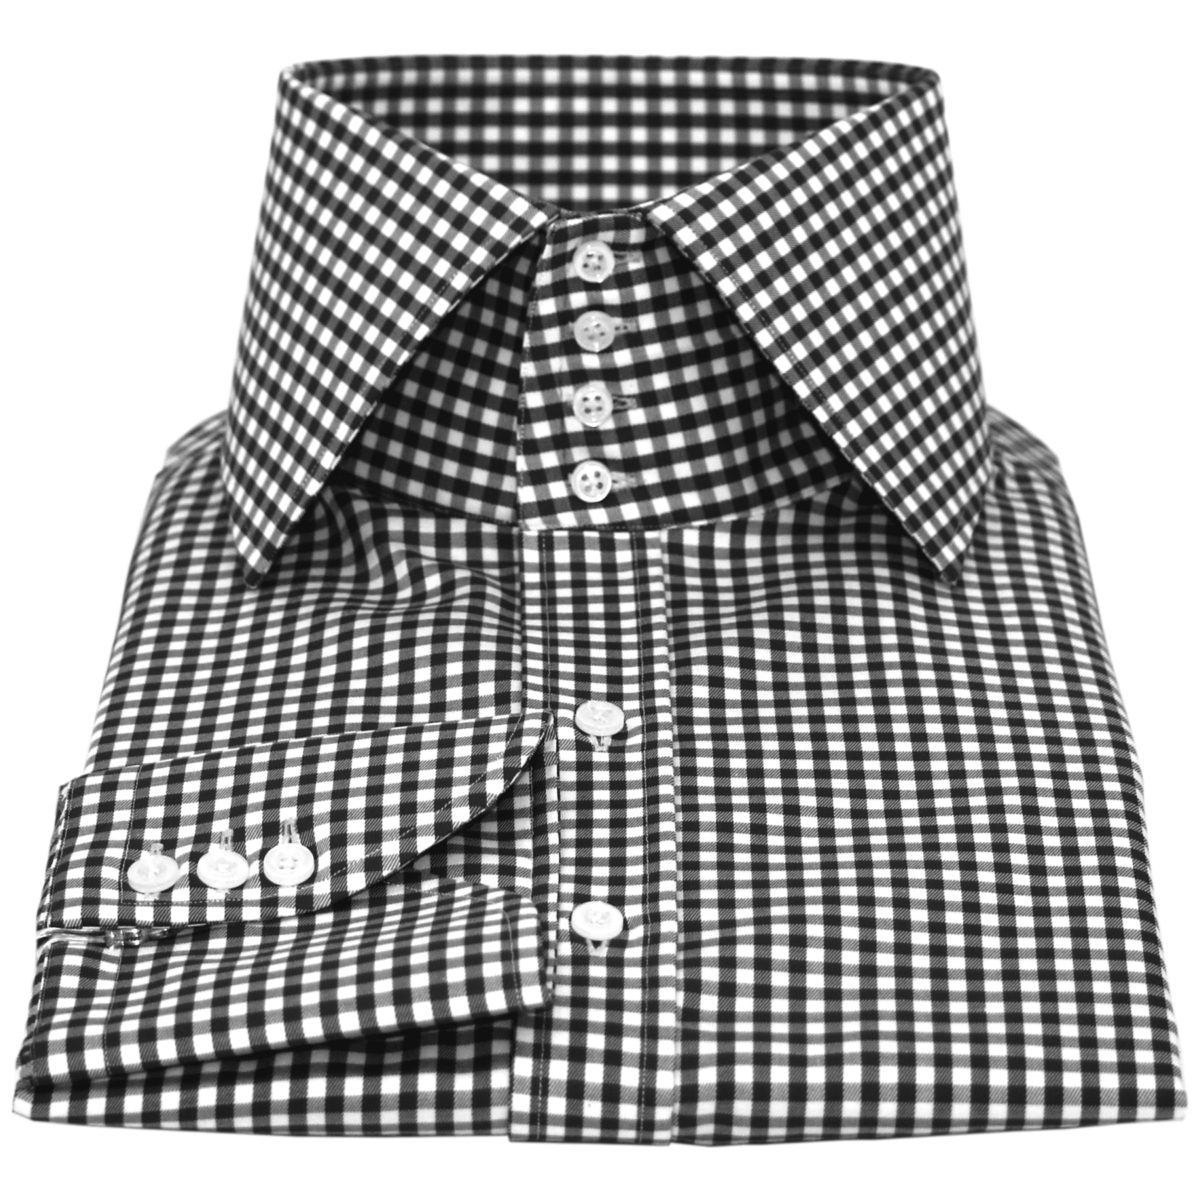 high collar 4 button shirt in 100% cotton